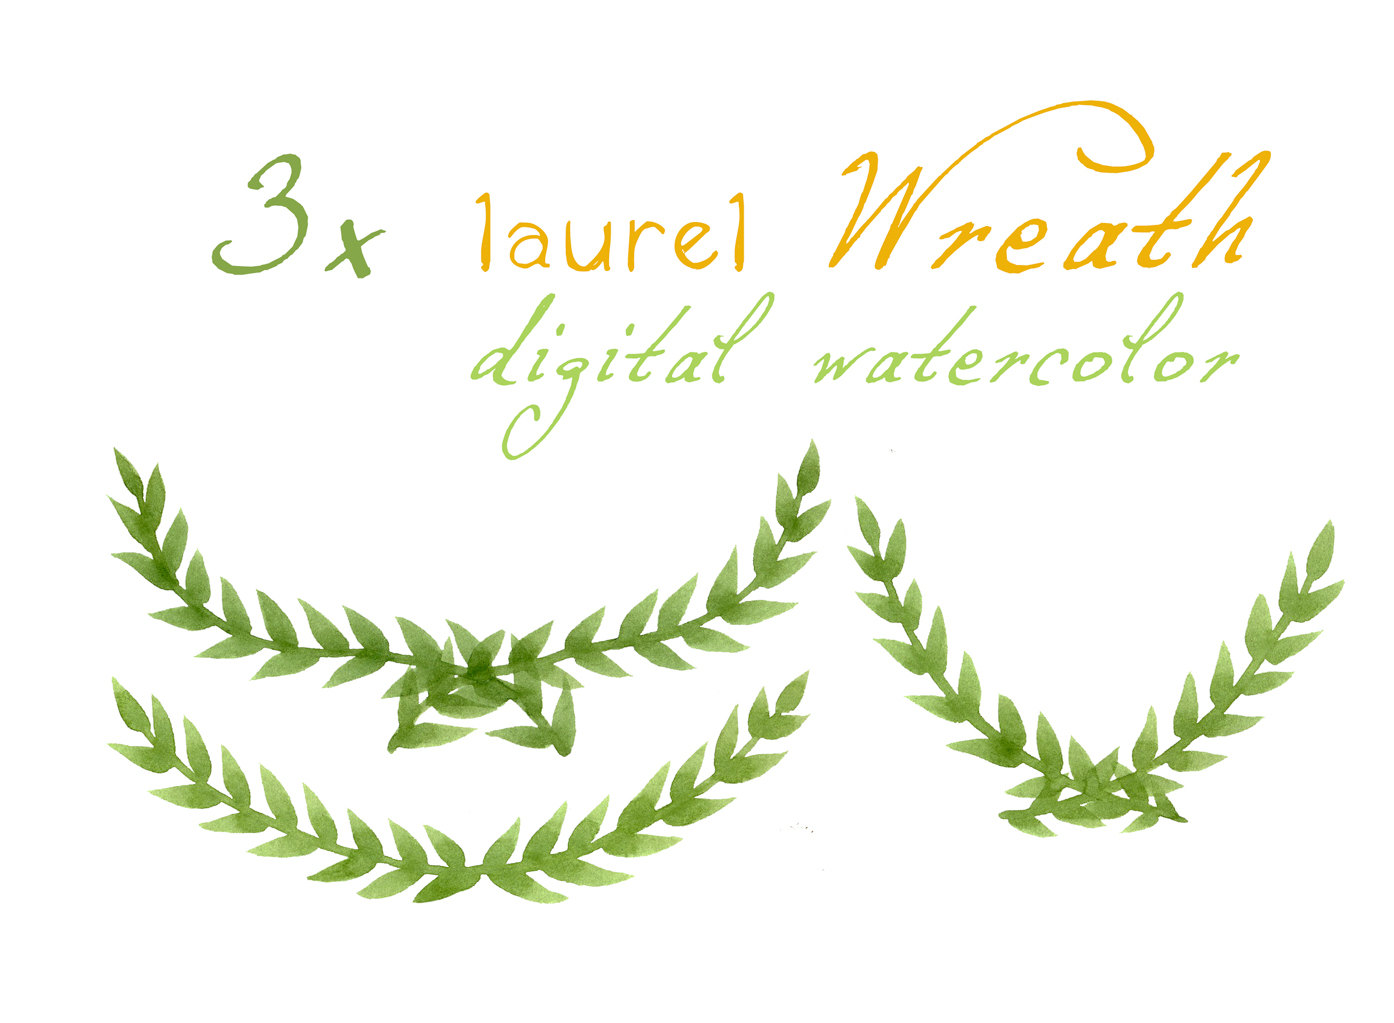 Popular items for laurel wreath on Etsy